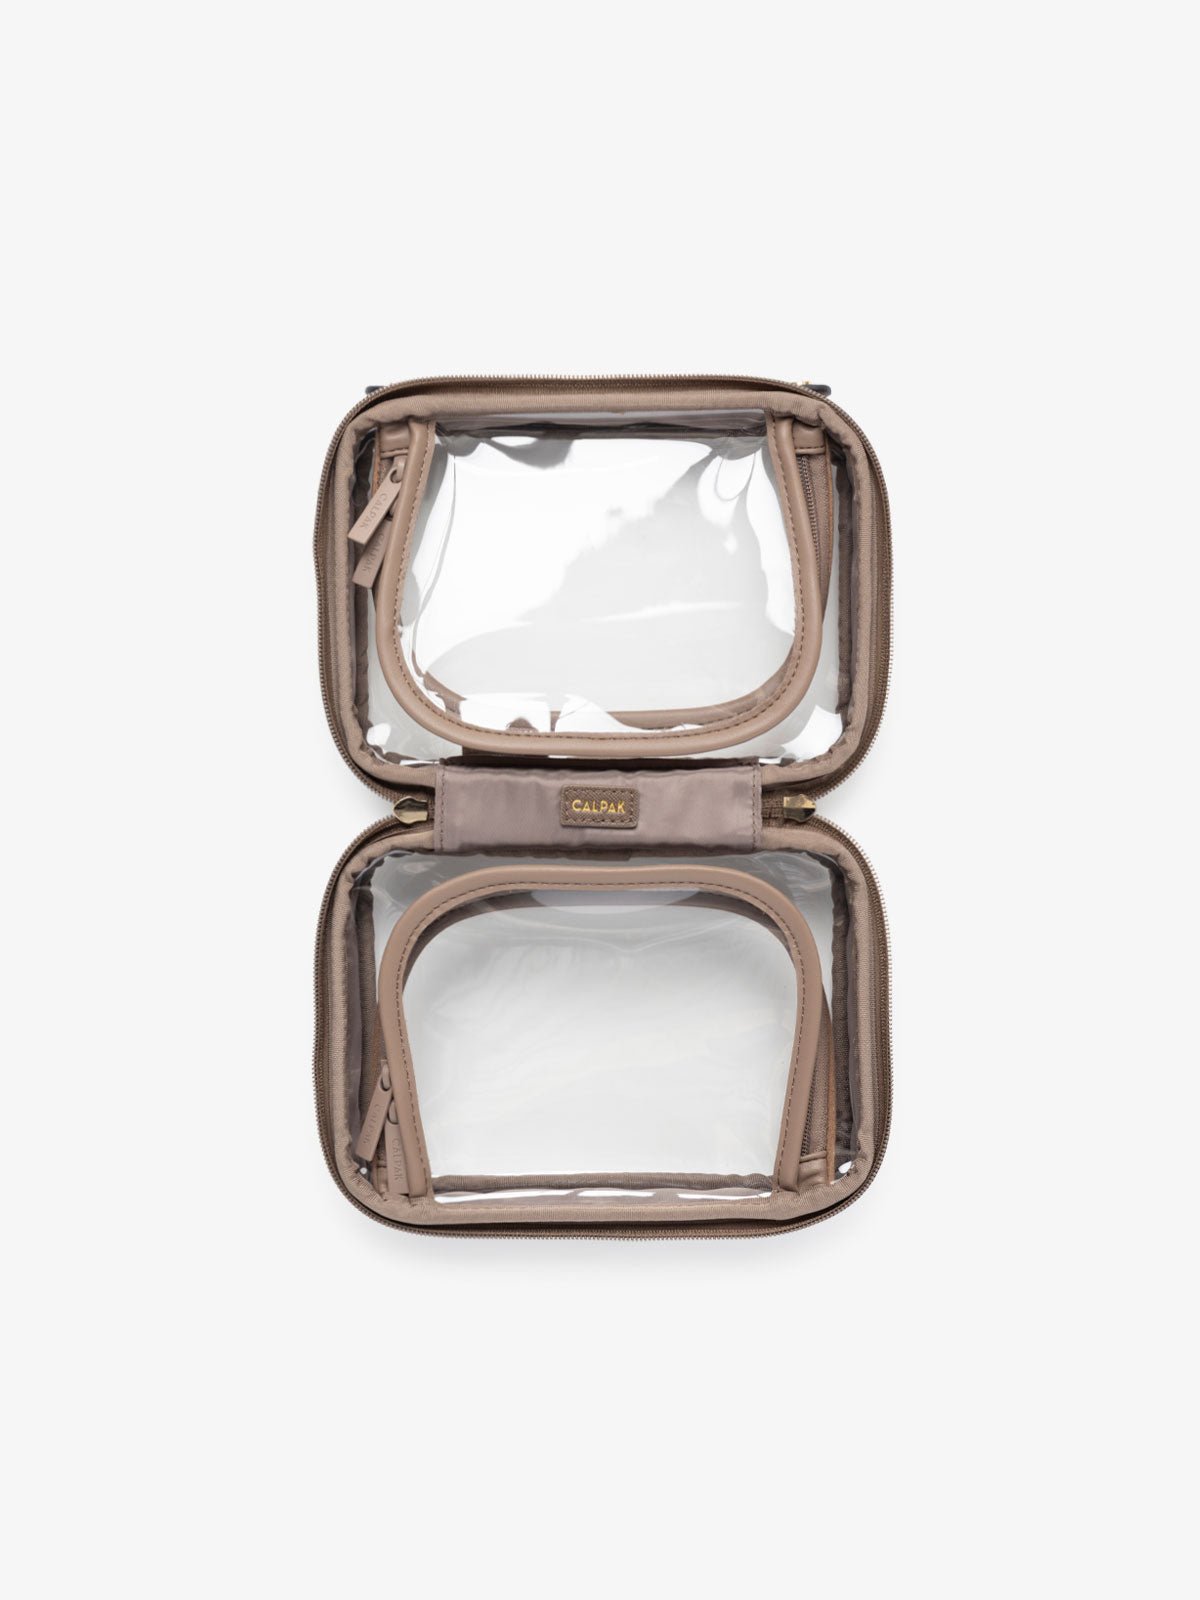 CALPAK mini transparent cosmetics case in mocha brown